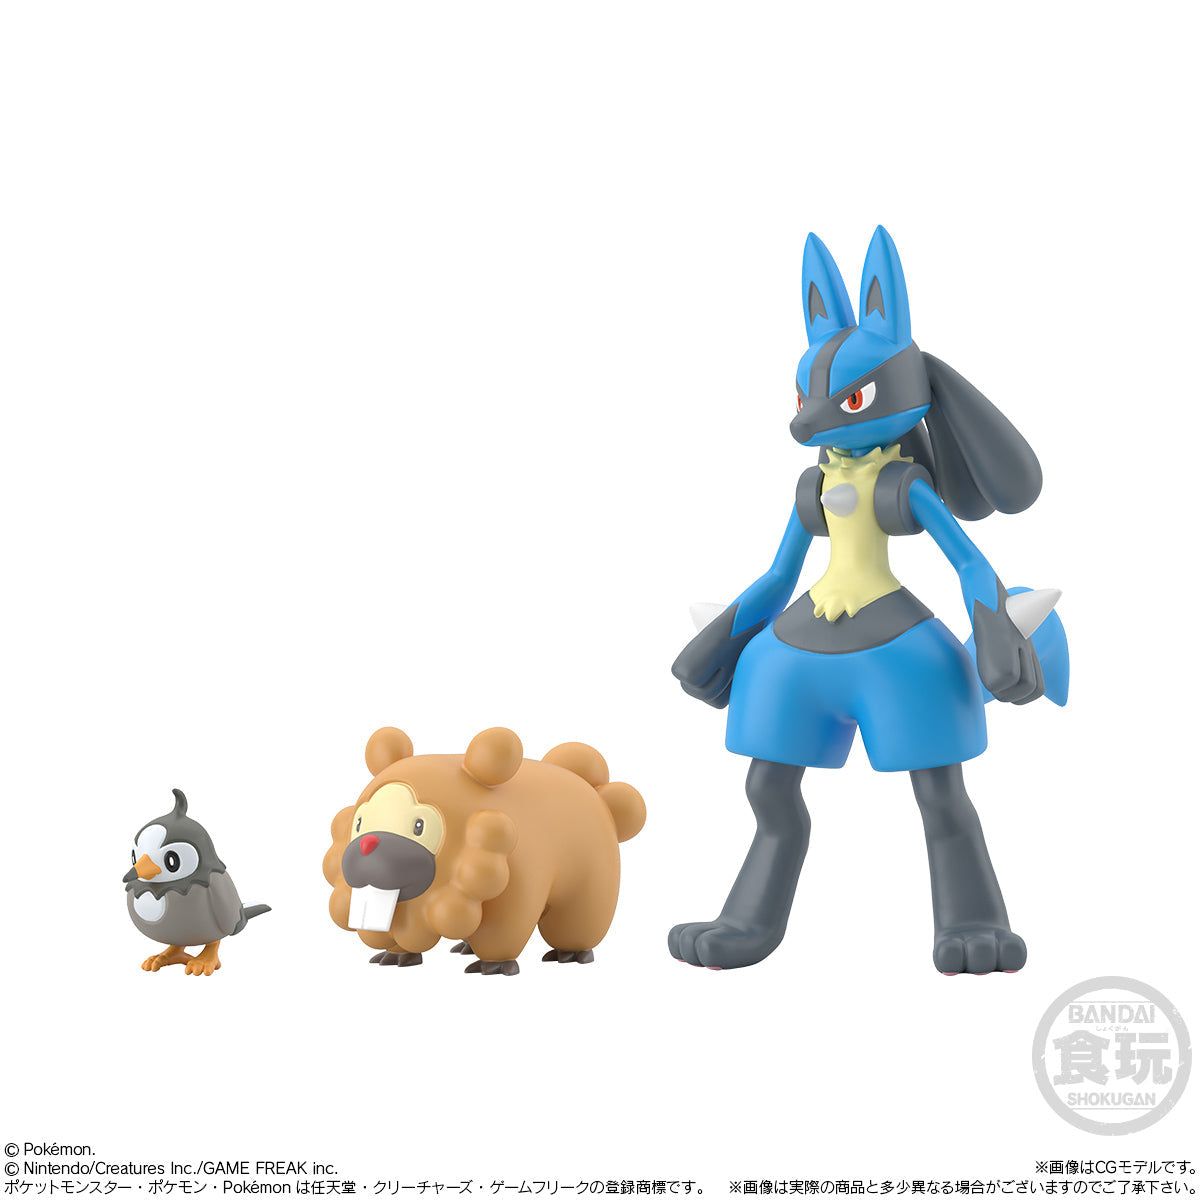 Platinum Ver. Dawn Pokemon Figure Announced!